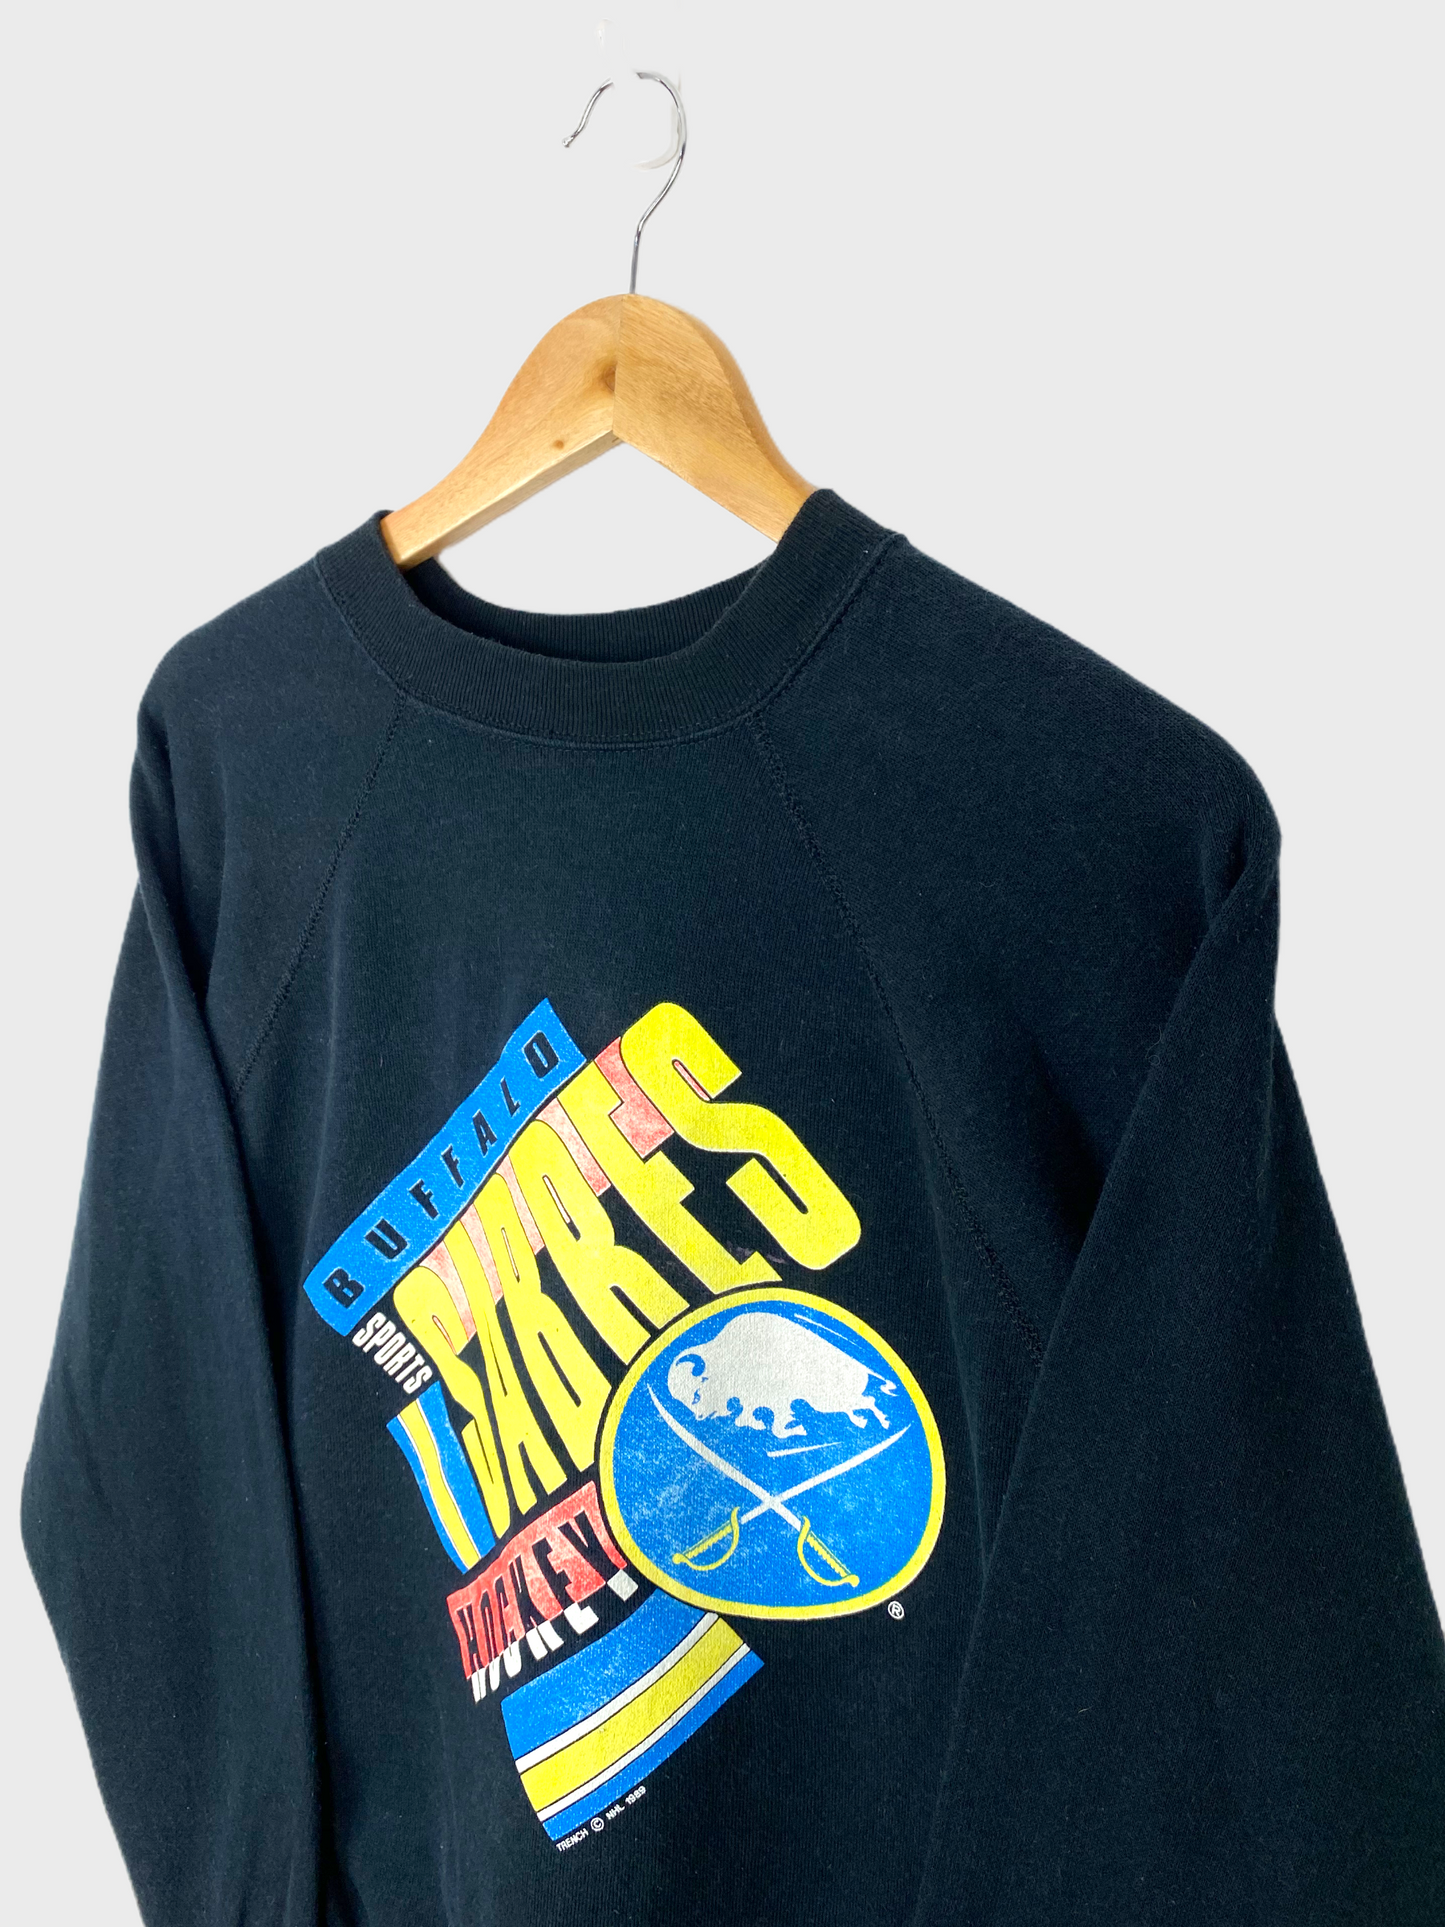 1989 Buffalo Sabres USA Made Light NHL Vintage Sweatshirt Size 6